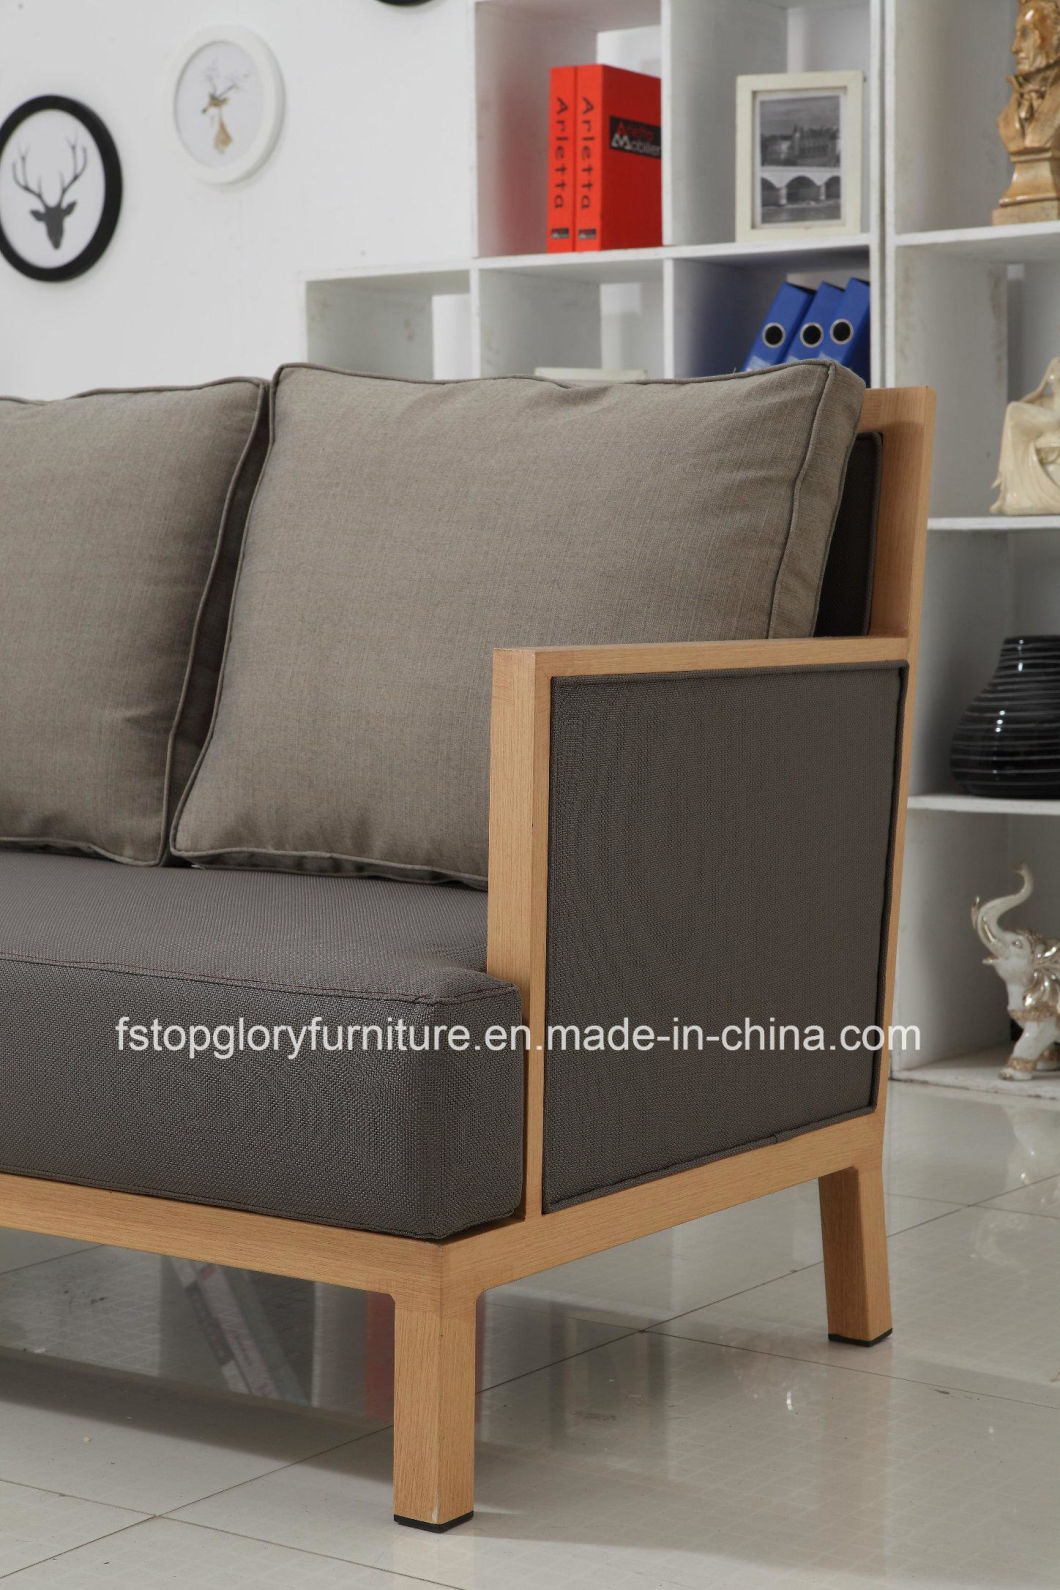 1.2mm Aluminum Wood-Look Frame and 2*2 Textilene Fabric Outdoor Sofa (TG-6104)